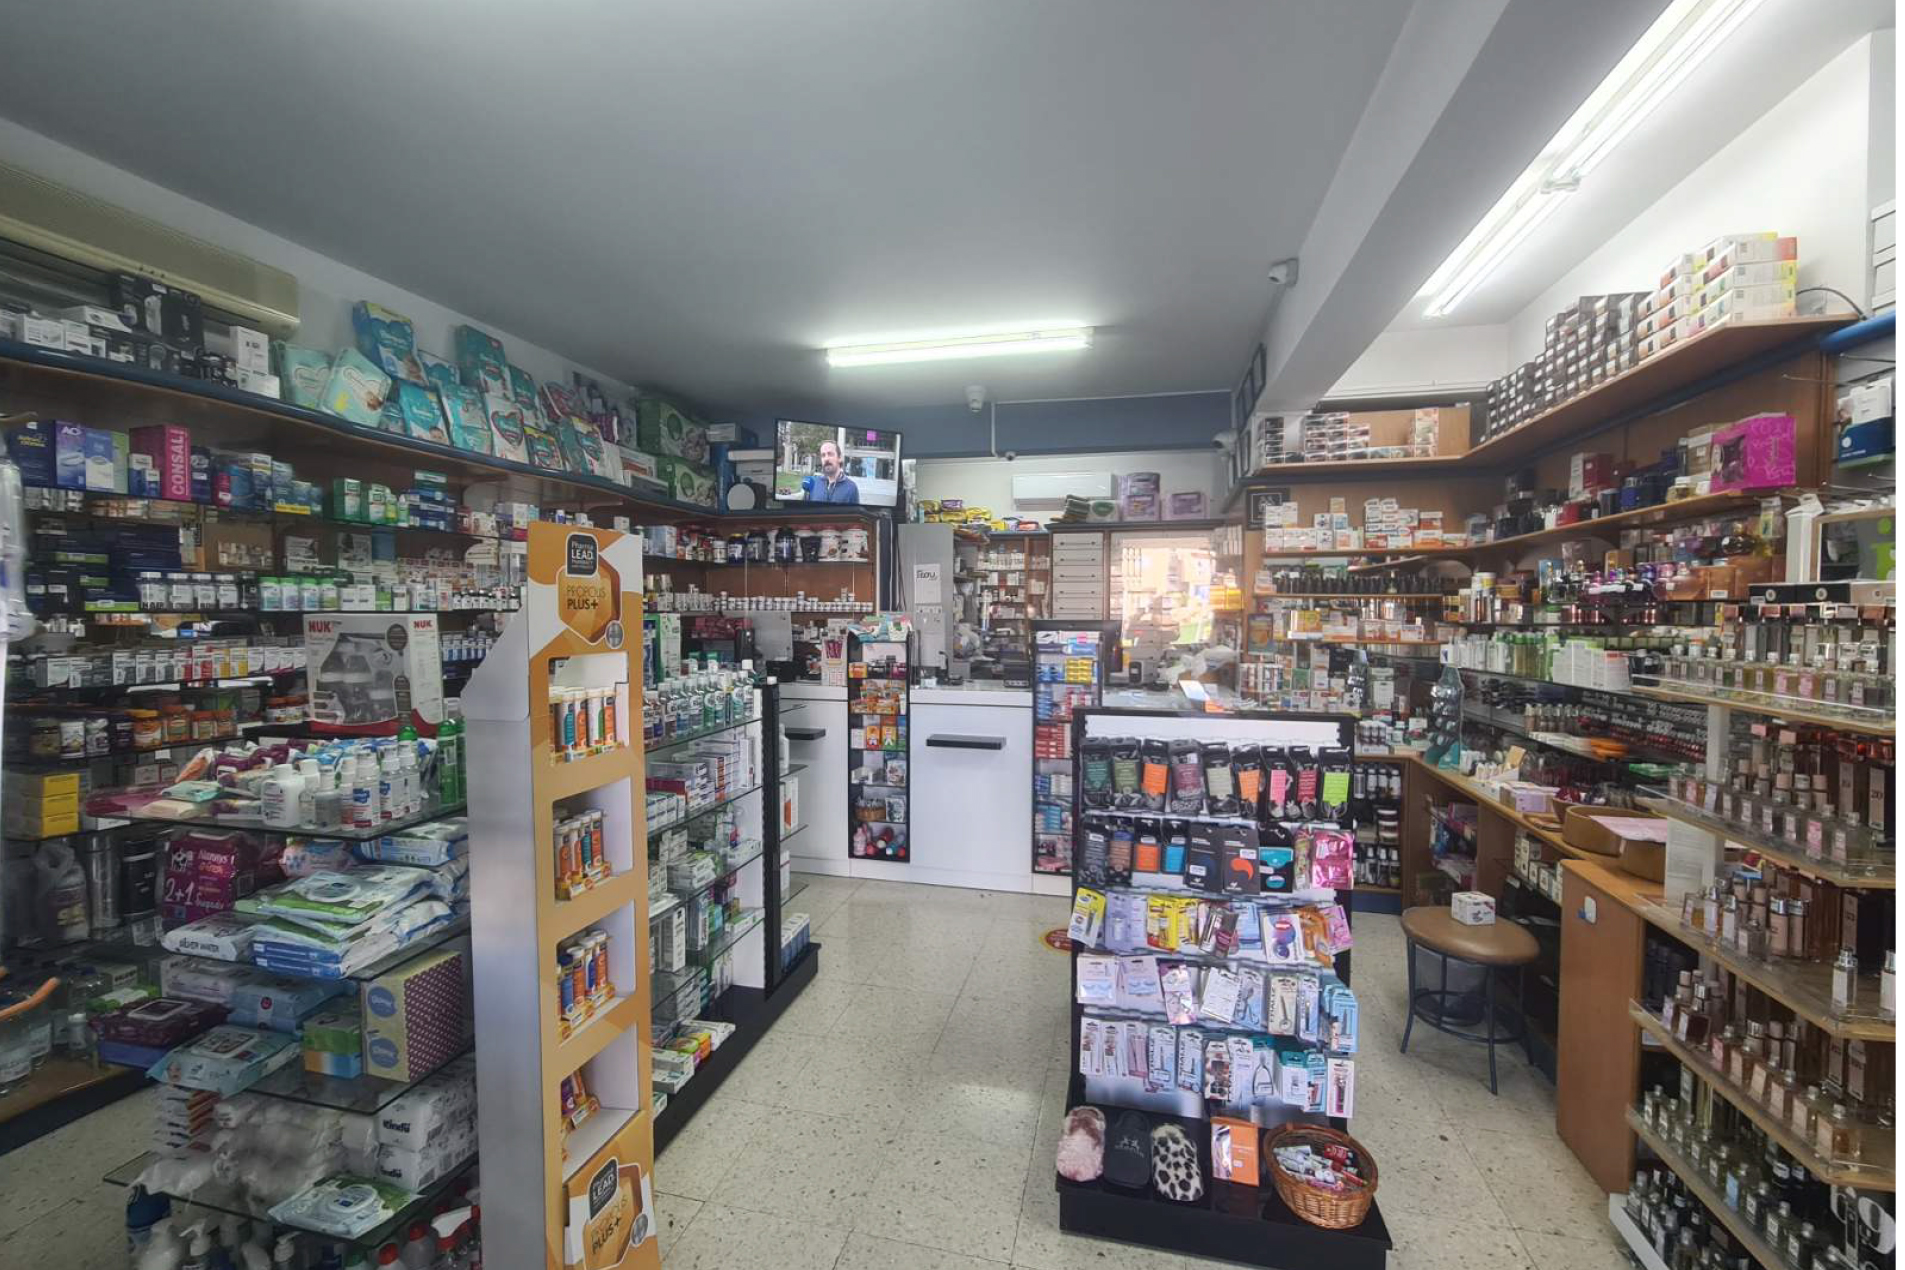 Pharmacy Constantinou Georgia